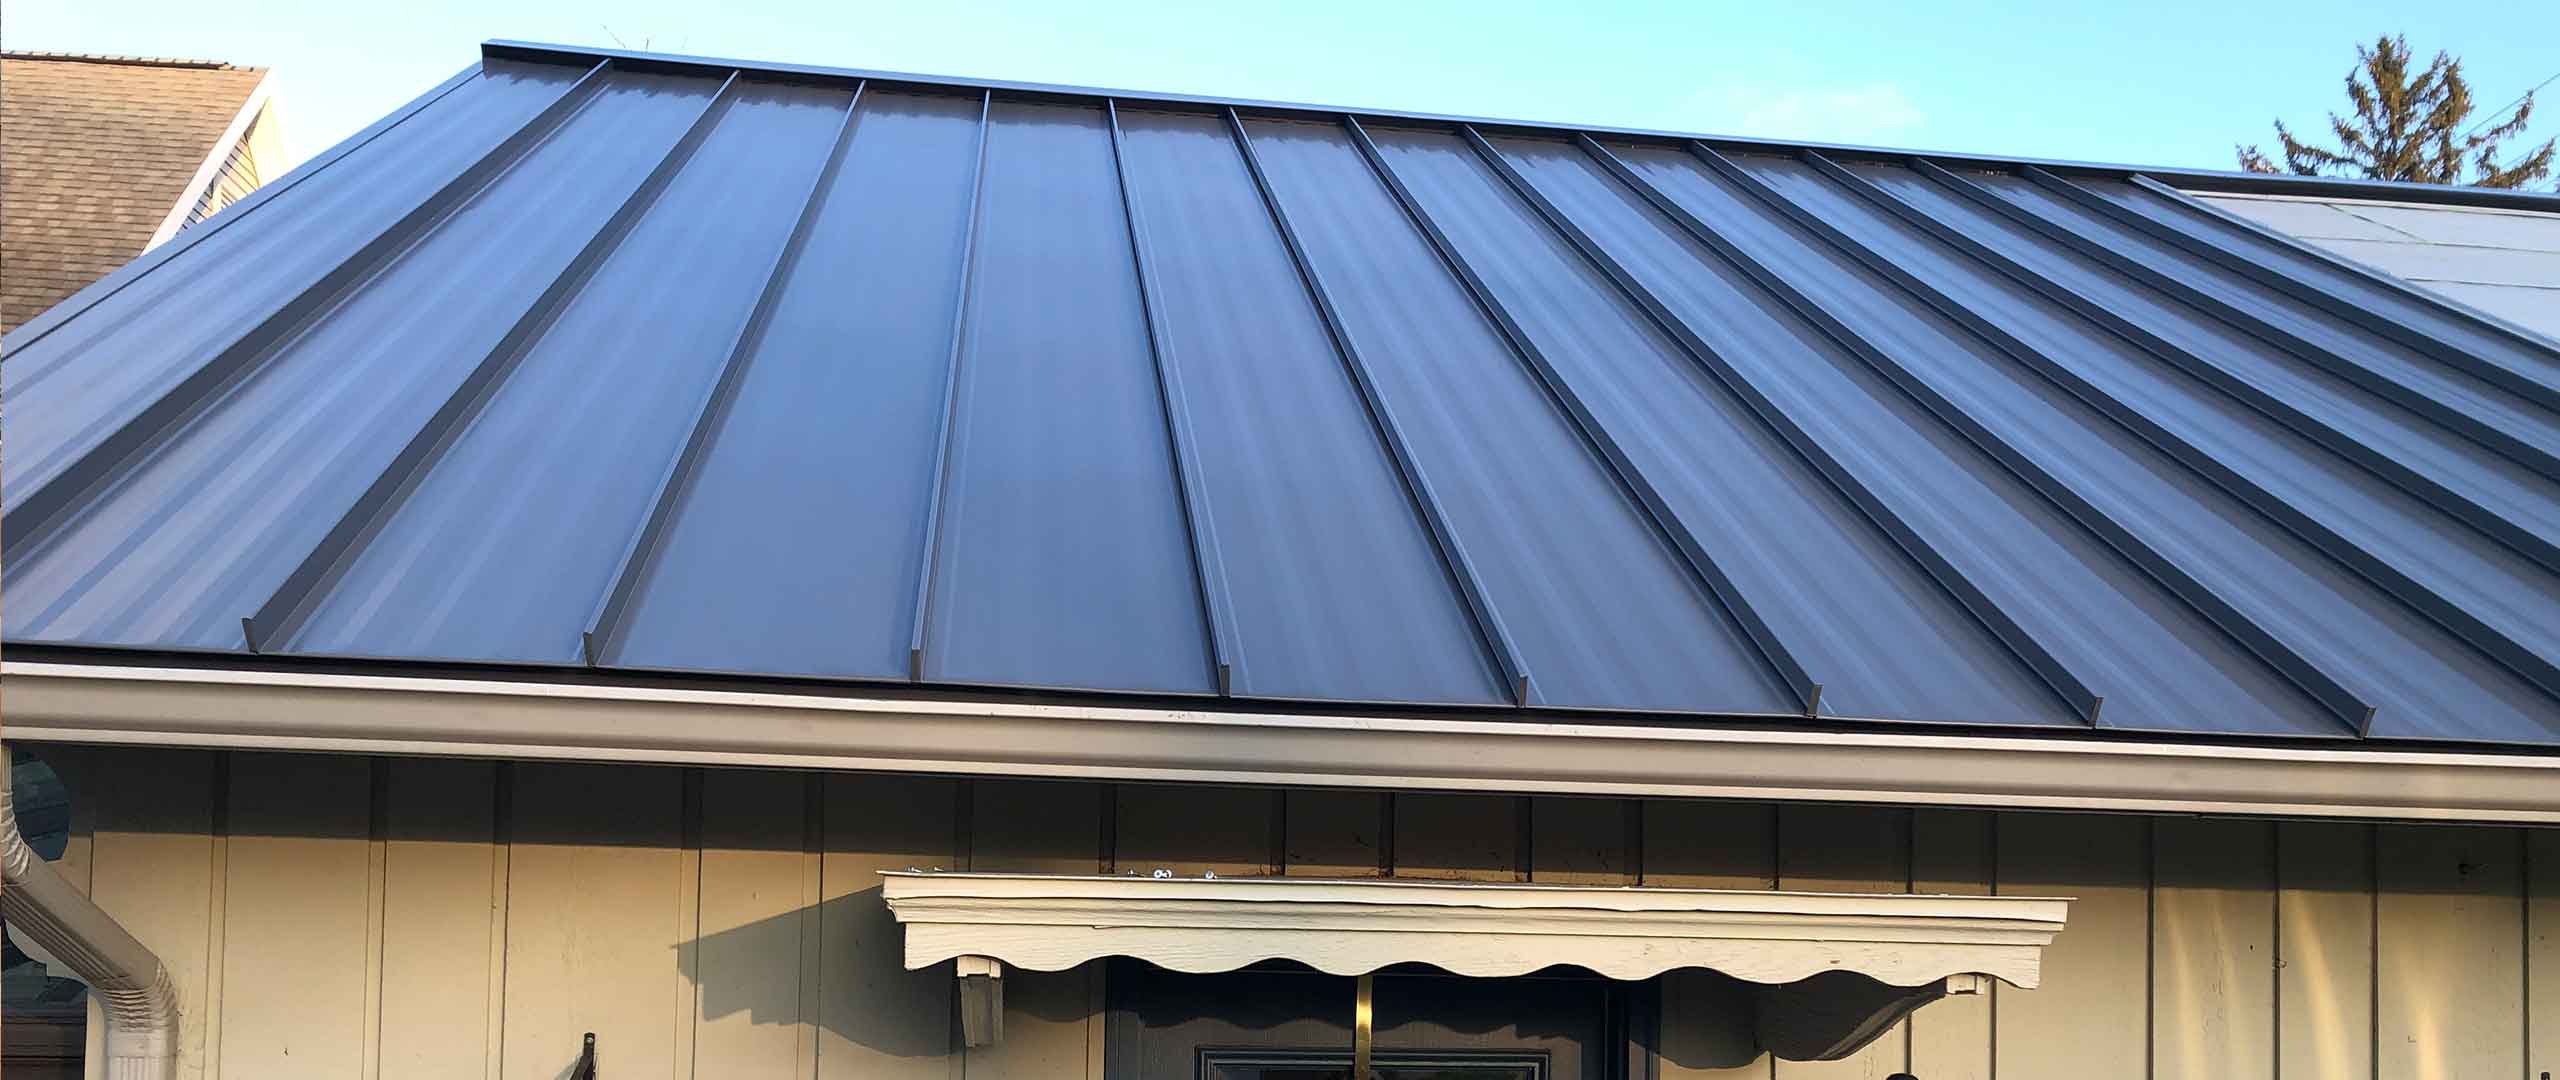 metal-roof-installation-by-mitten-exteriors-grand-rapids-mi